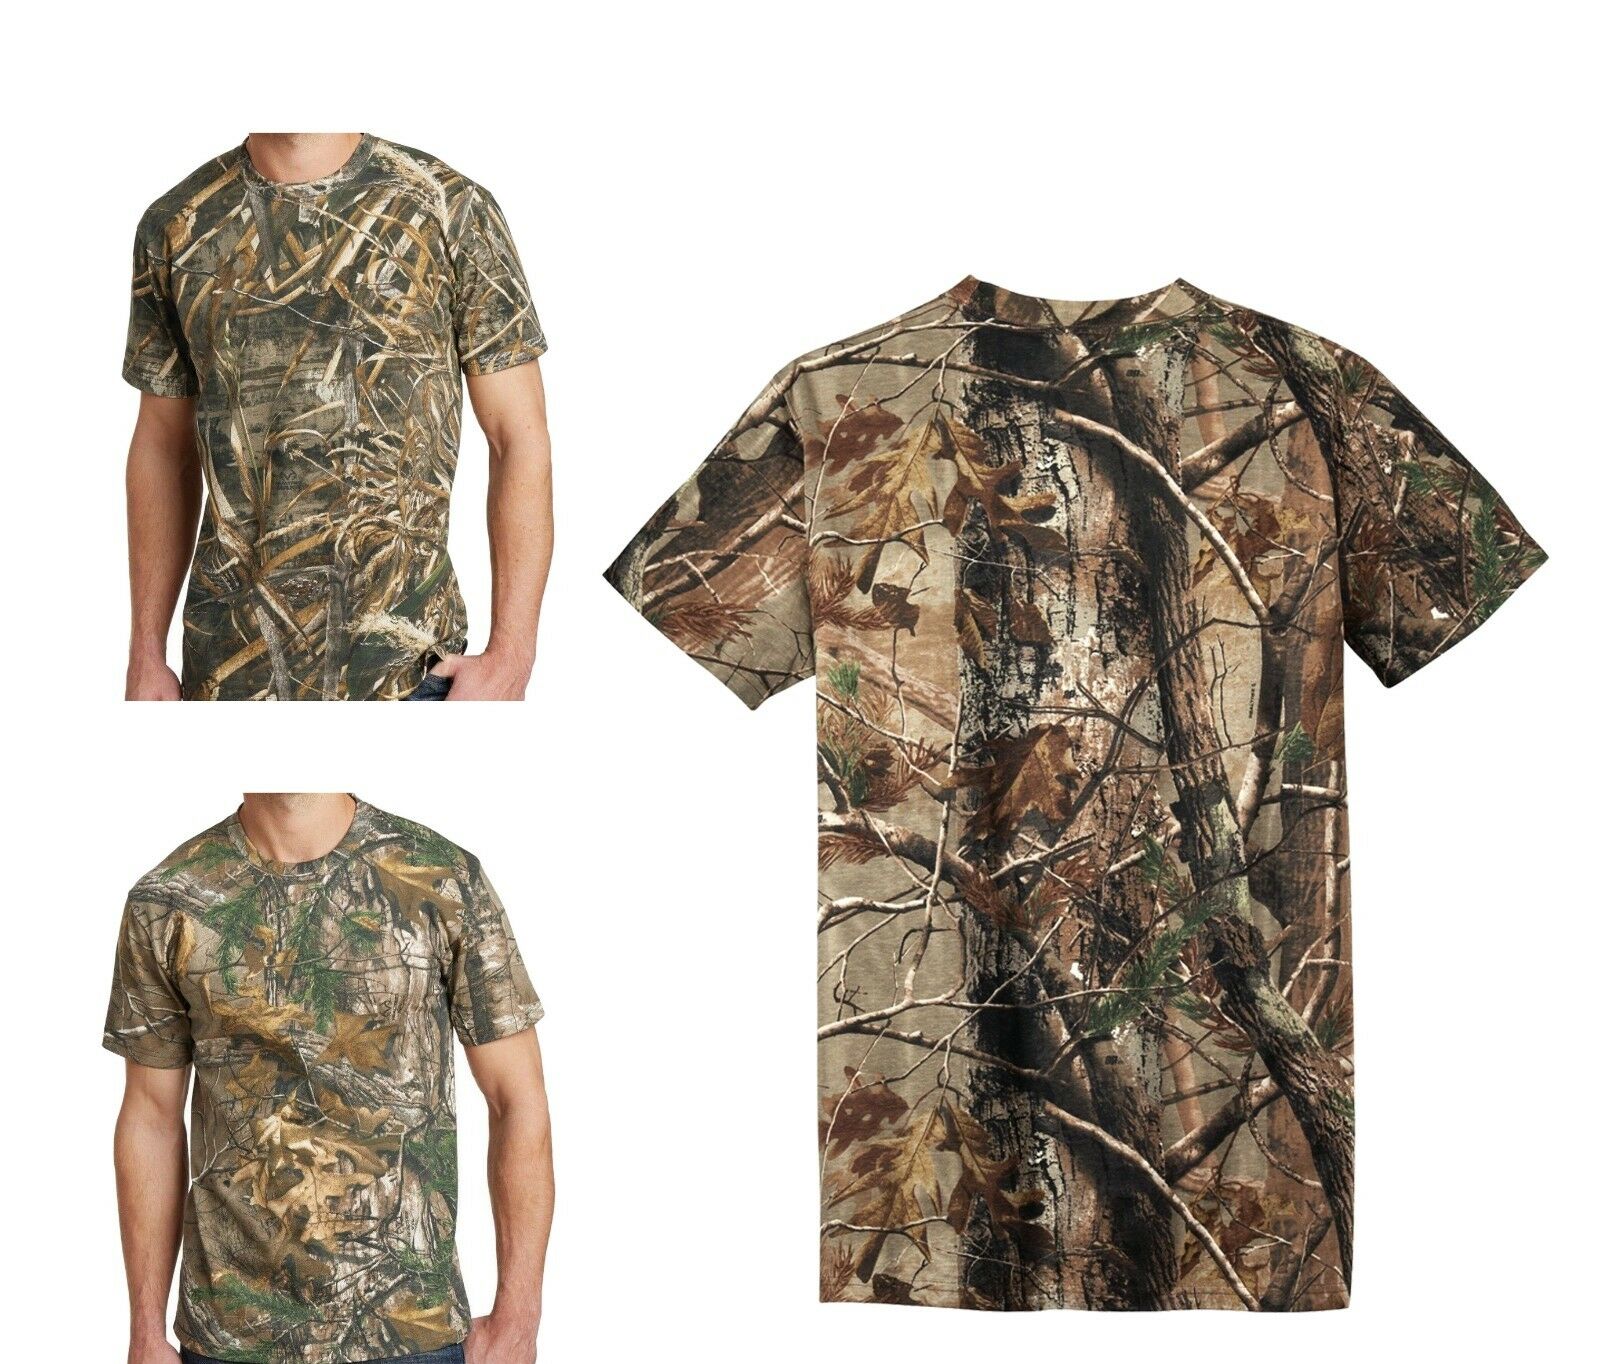 Russell Mens Camo T-shirt Realtree Xtra, Max 5, Ap Cotton Hunting S-xl 2x 3x New